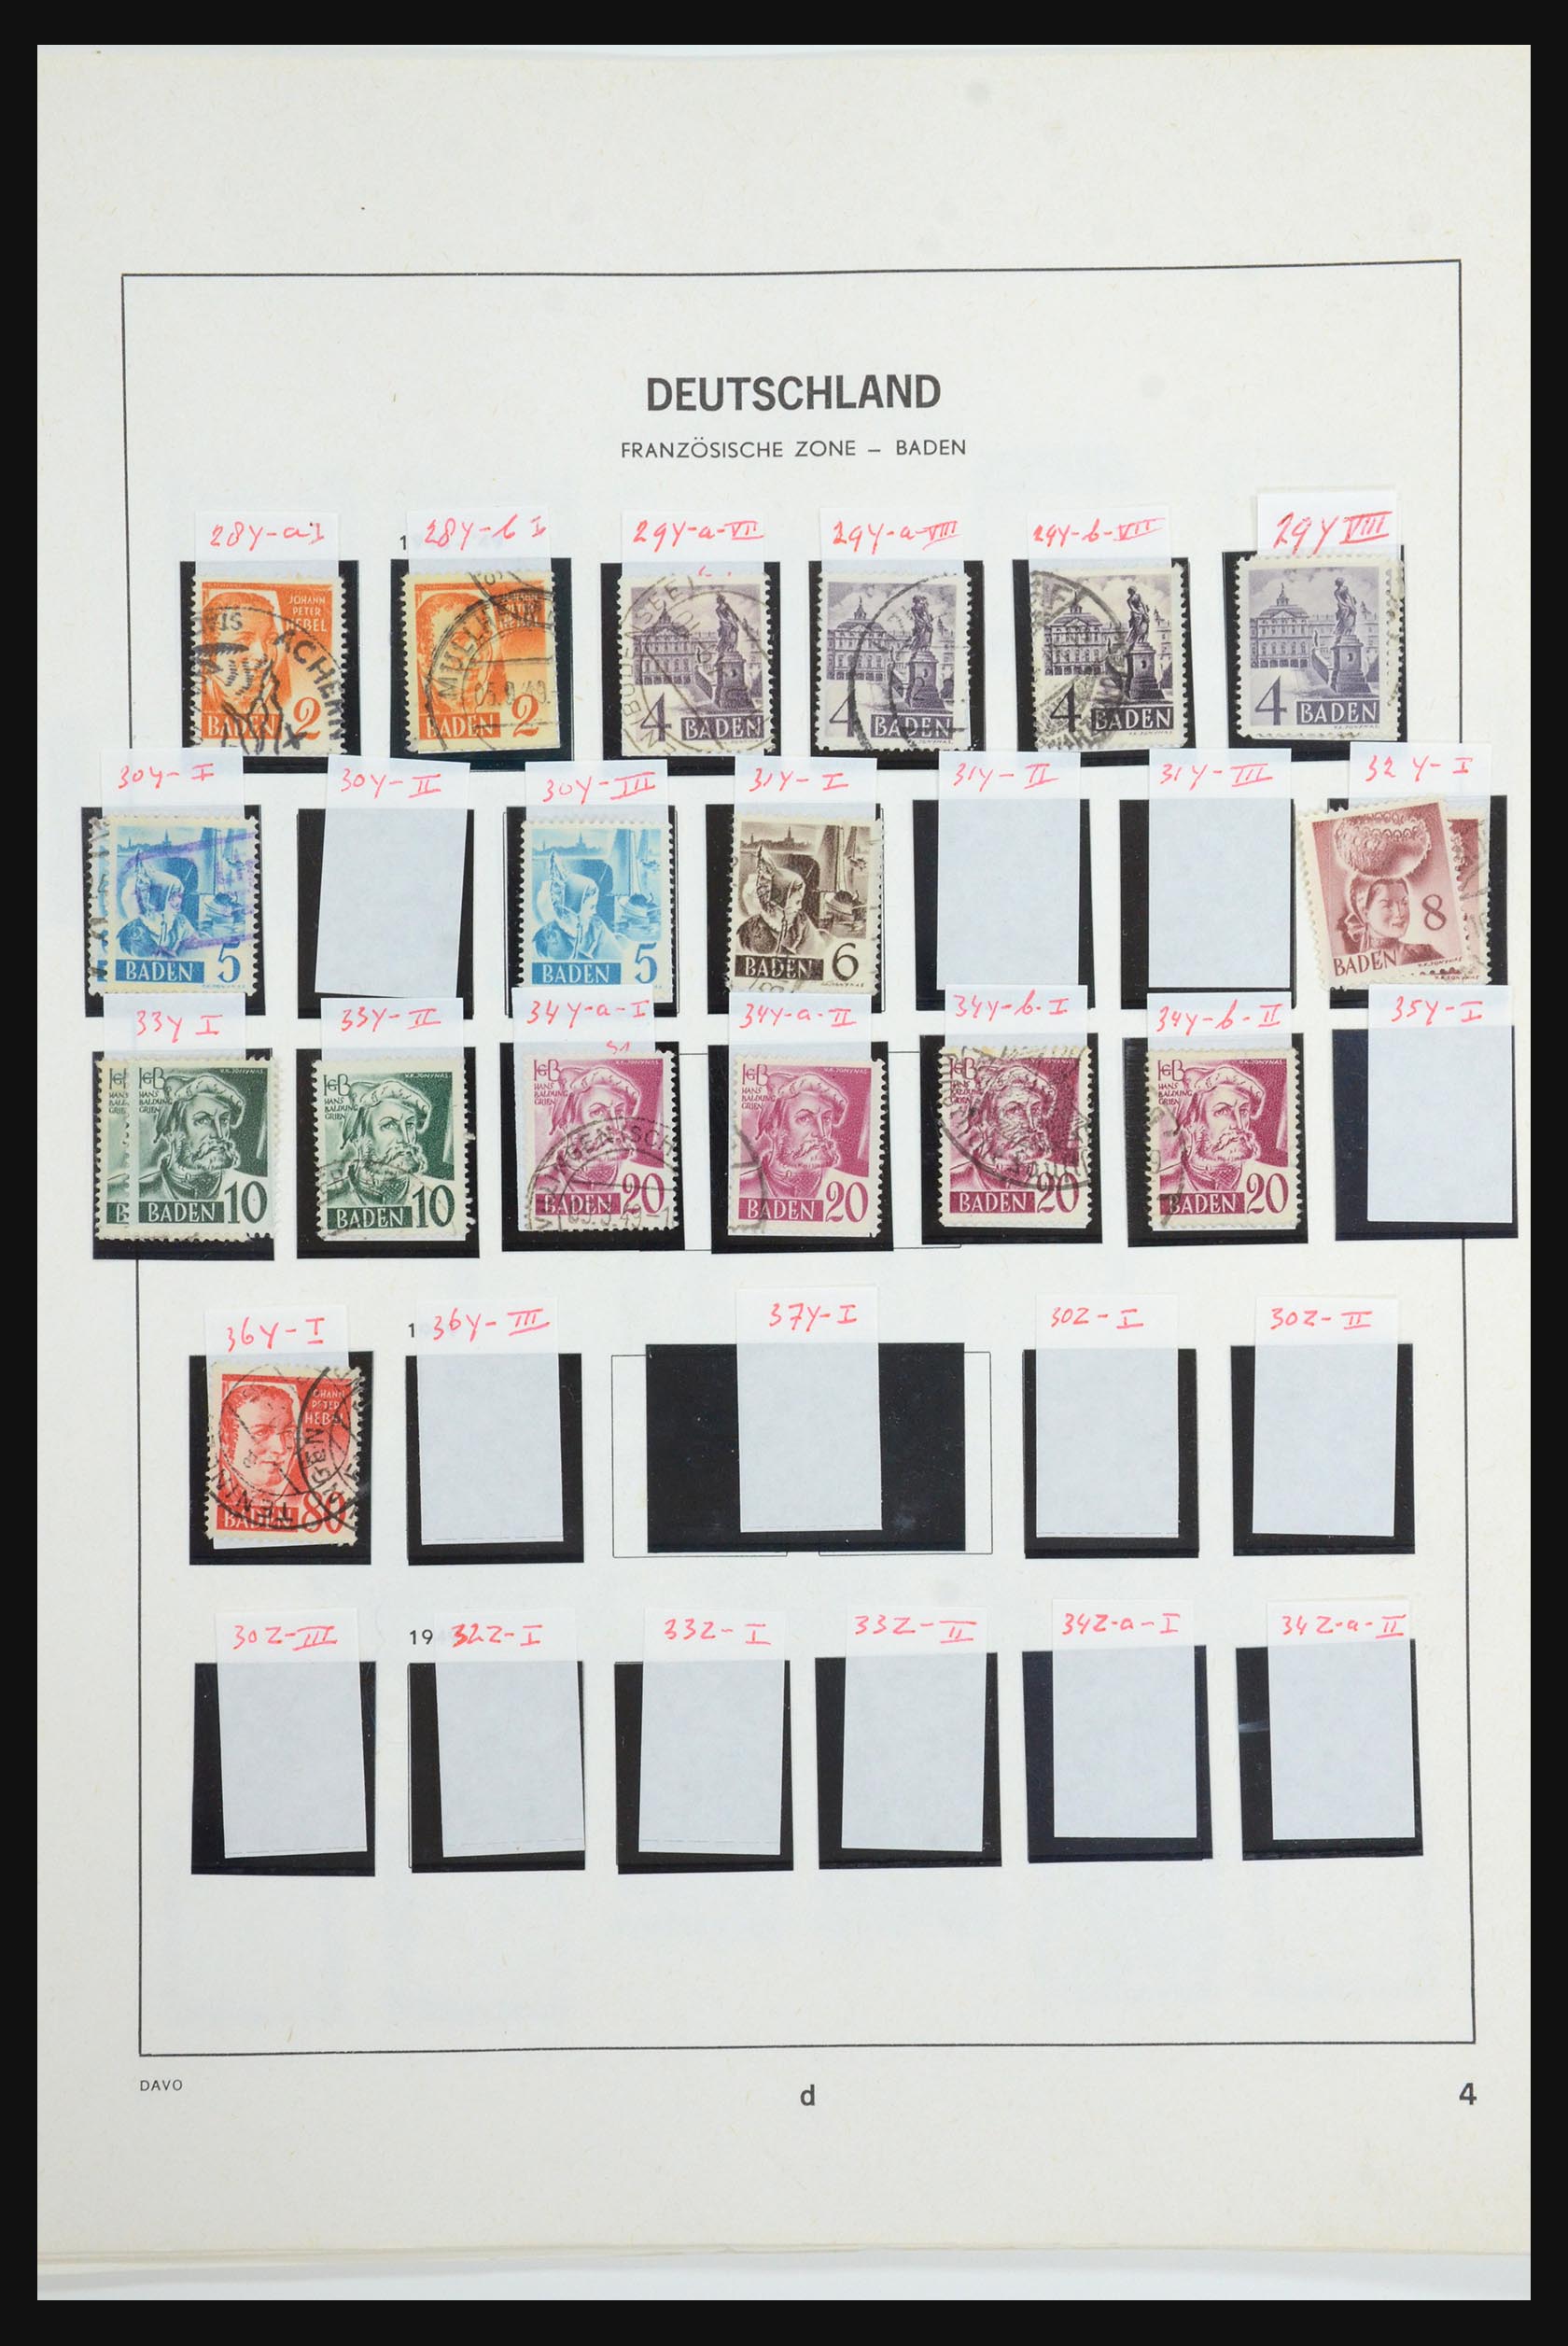 31635 013 - 31635 Bundespost 1949-2000.